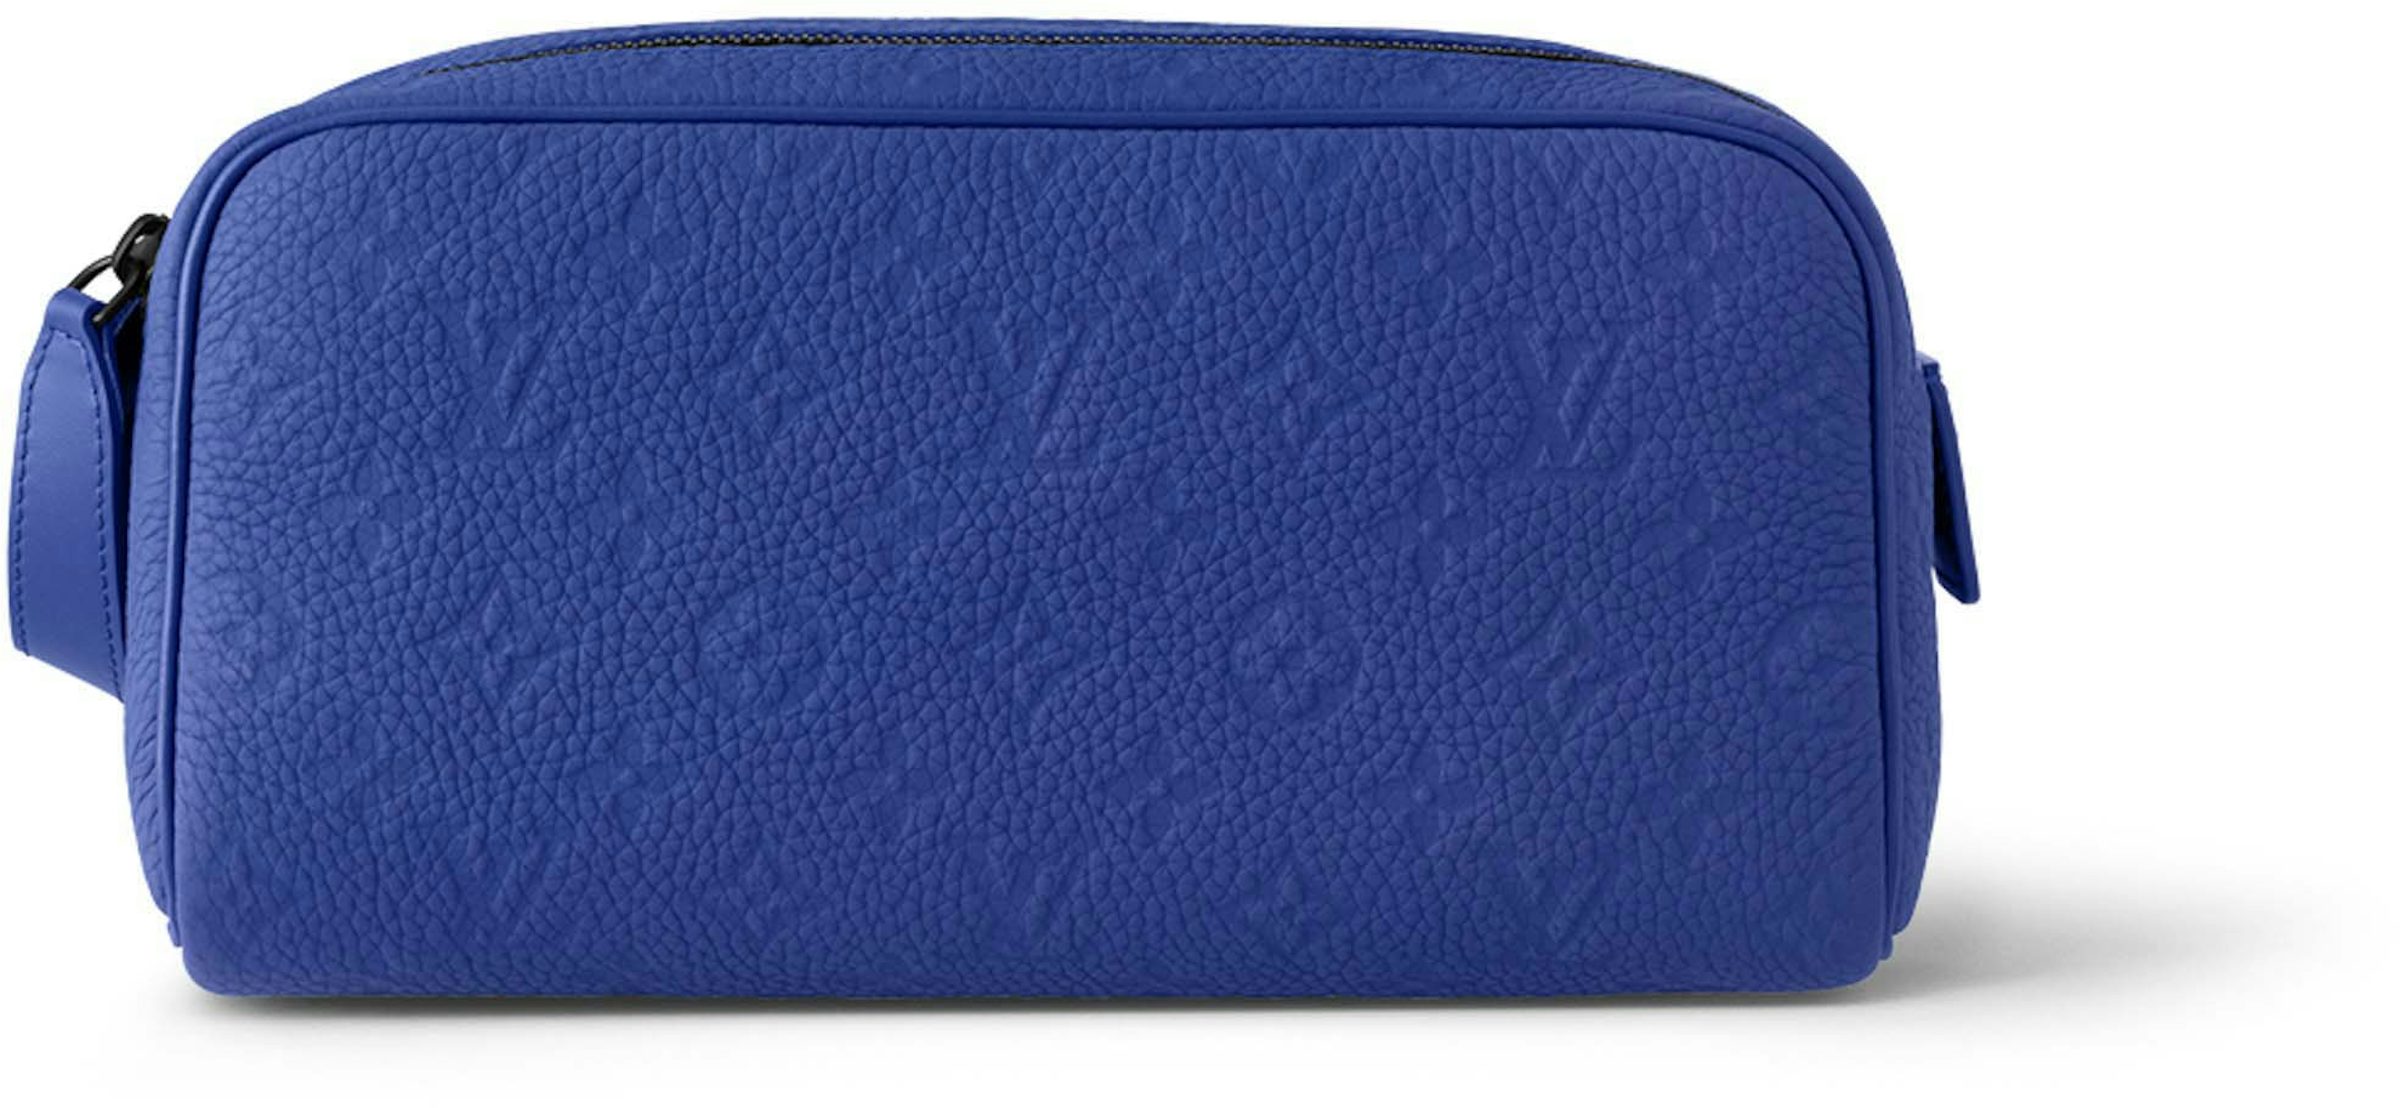 Louis Vuitton Dopp Kit Racing Blue in Embossed Taurillon Monogram